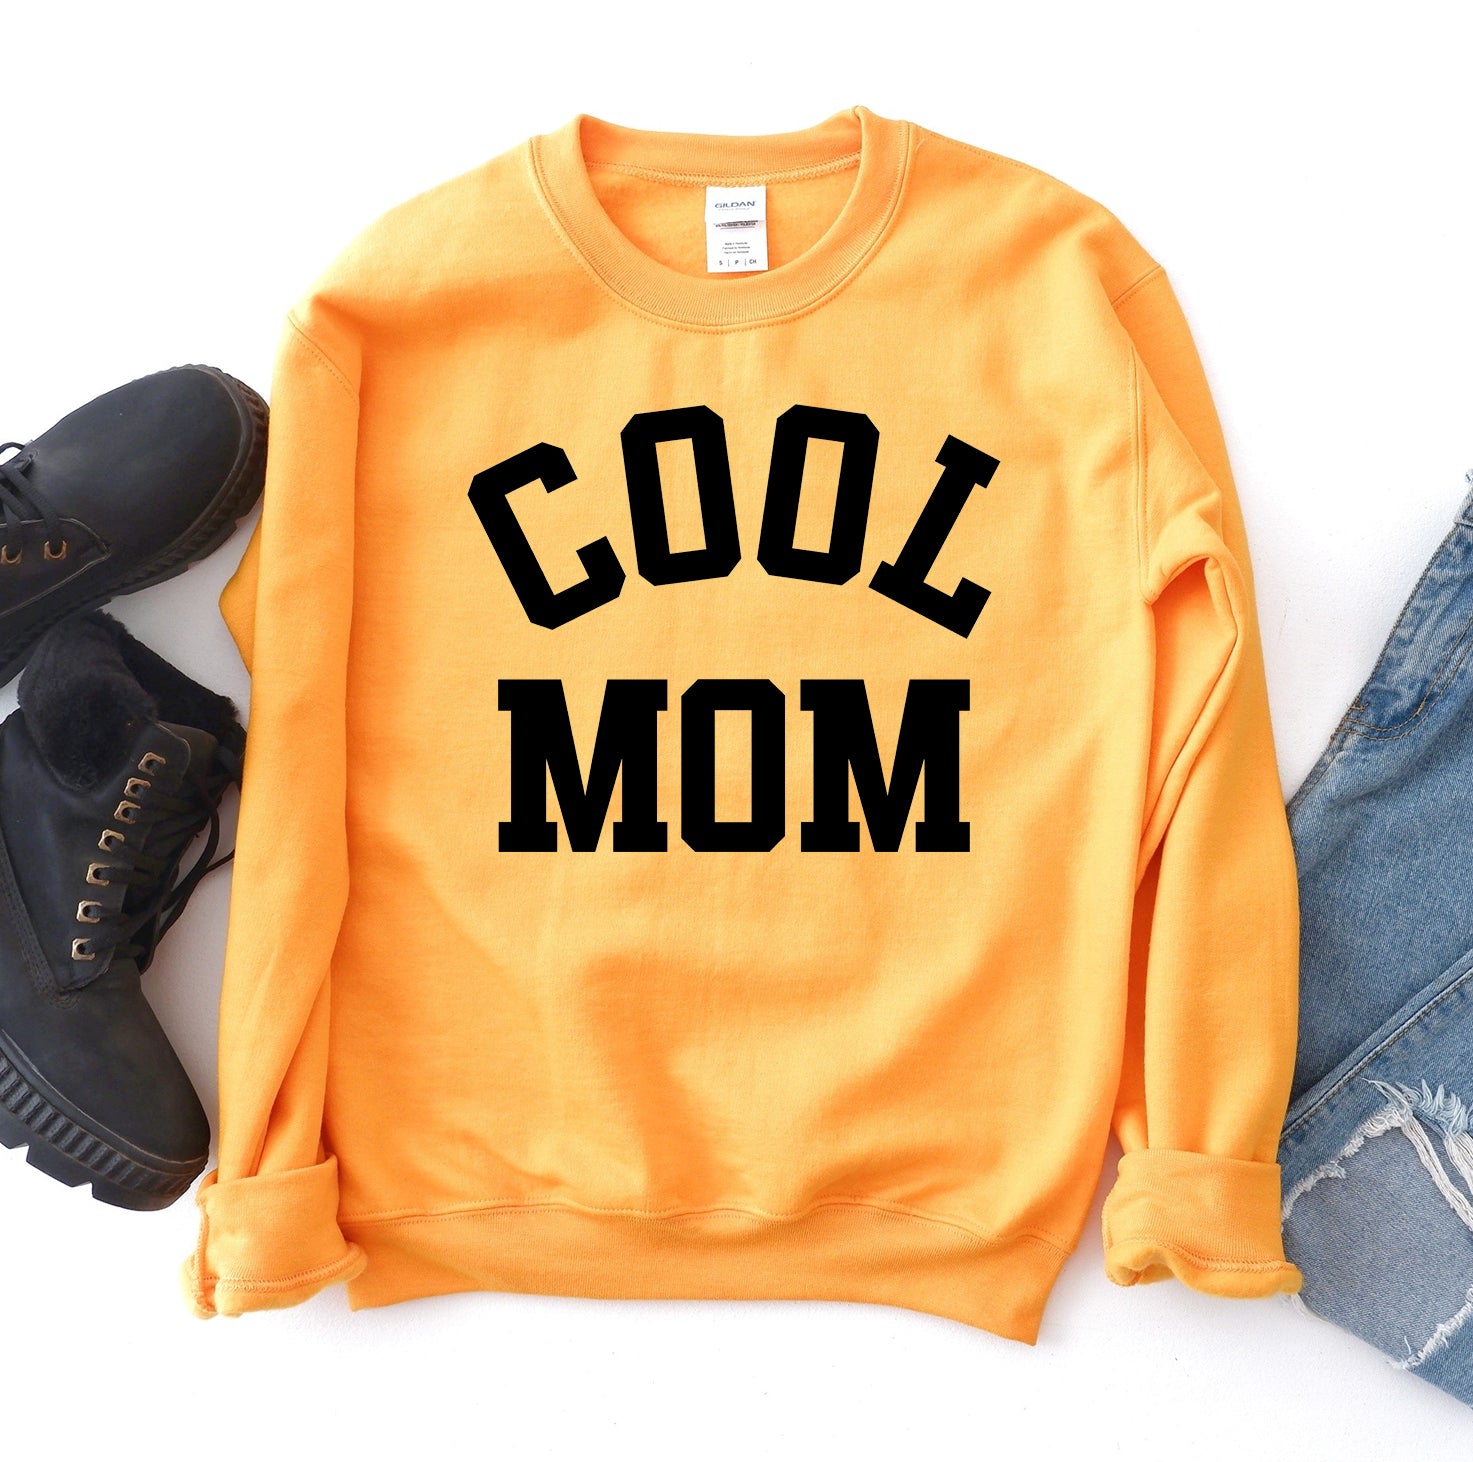 Cool Mom Sweatshirt - All Good Laces